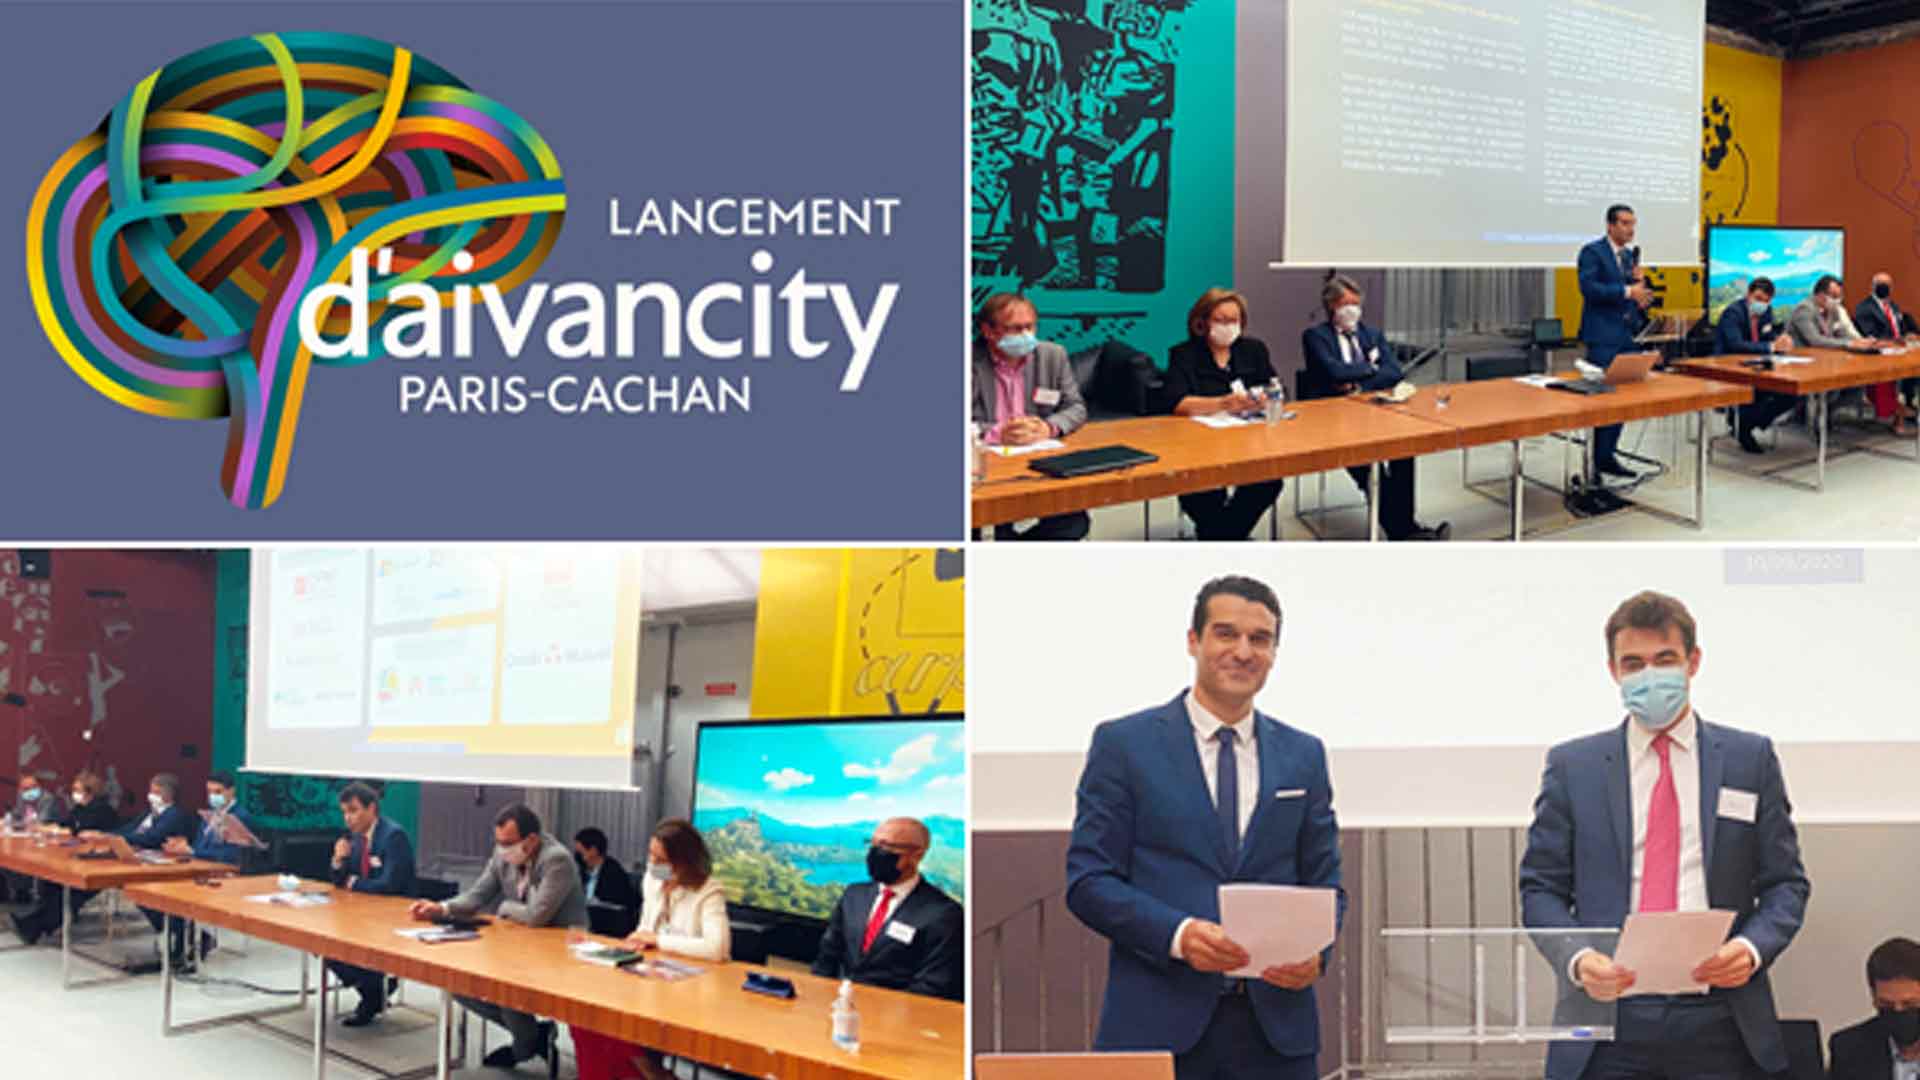 lancement d’aivancity school for technology, business & society paris-cachan